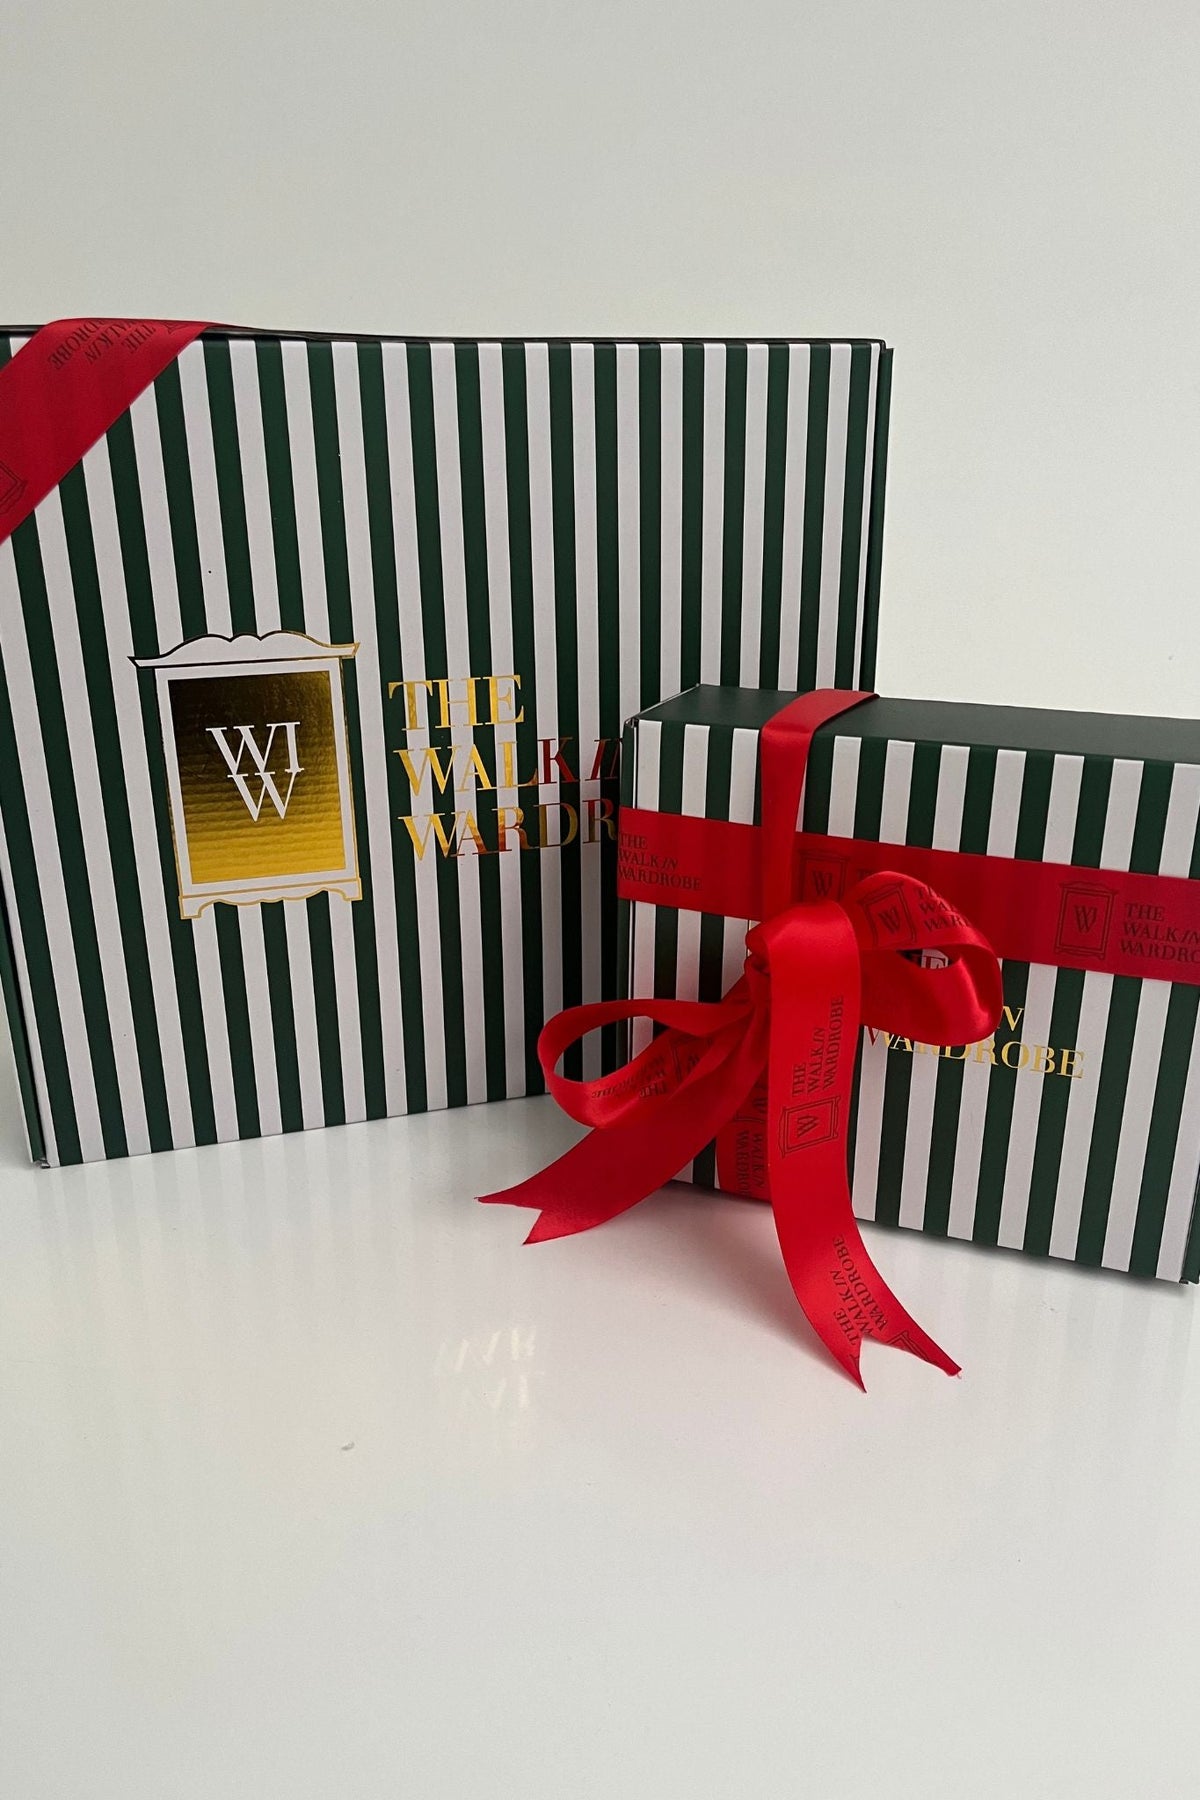 WIW Luxury Christmas Packaging - The Walk in Wardrobe